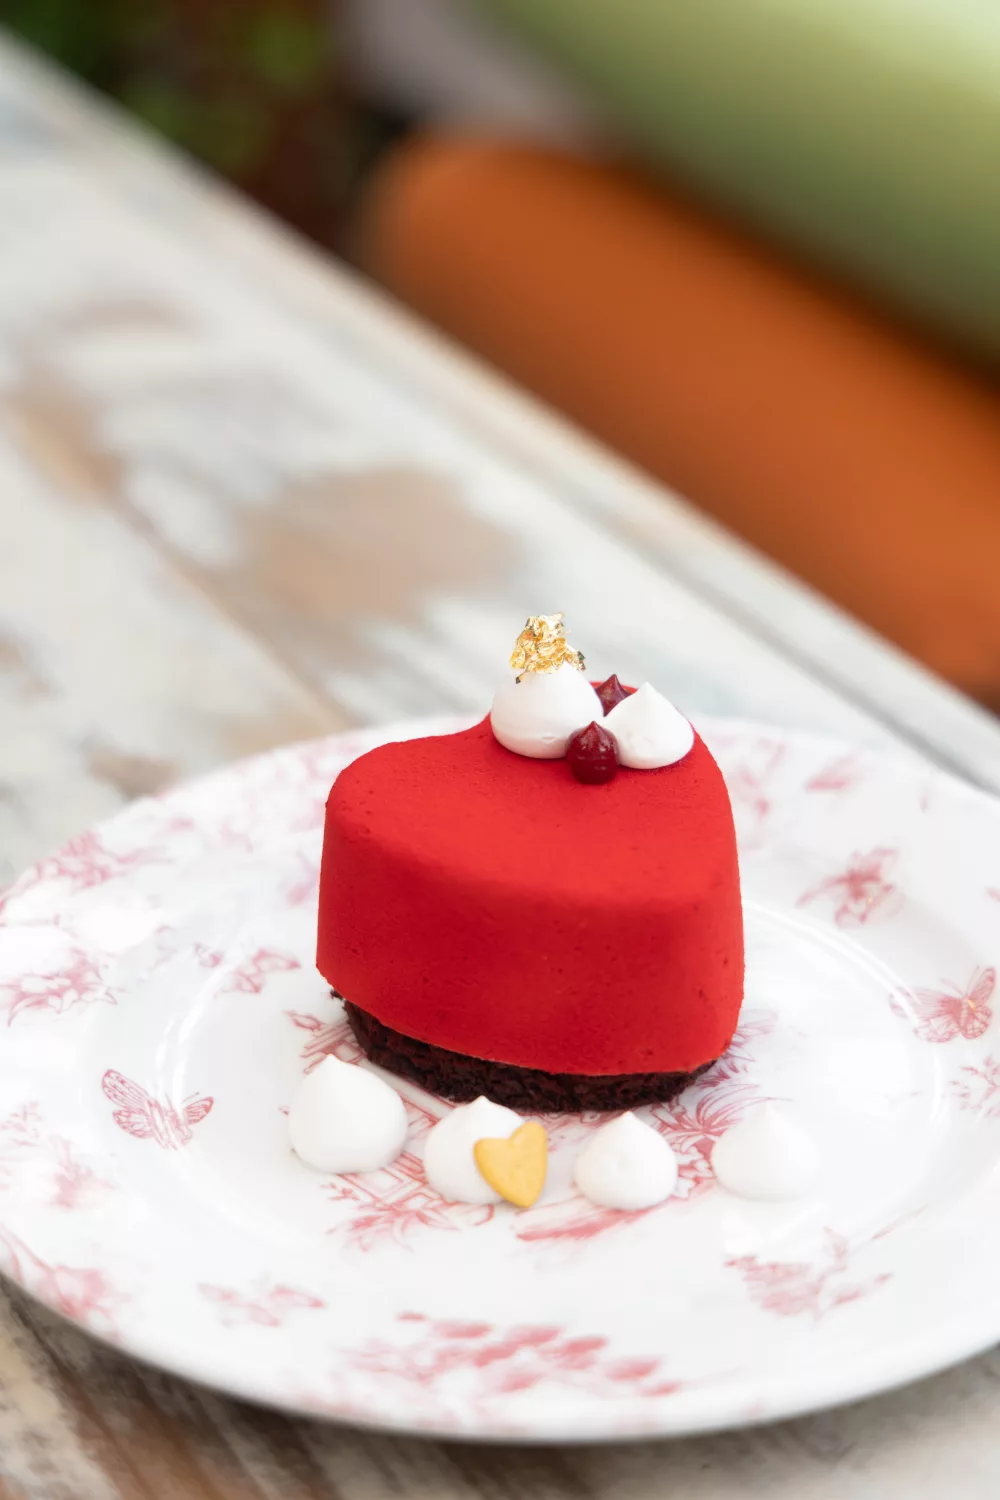 red heart dessert on a plate